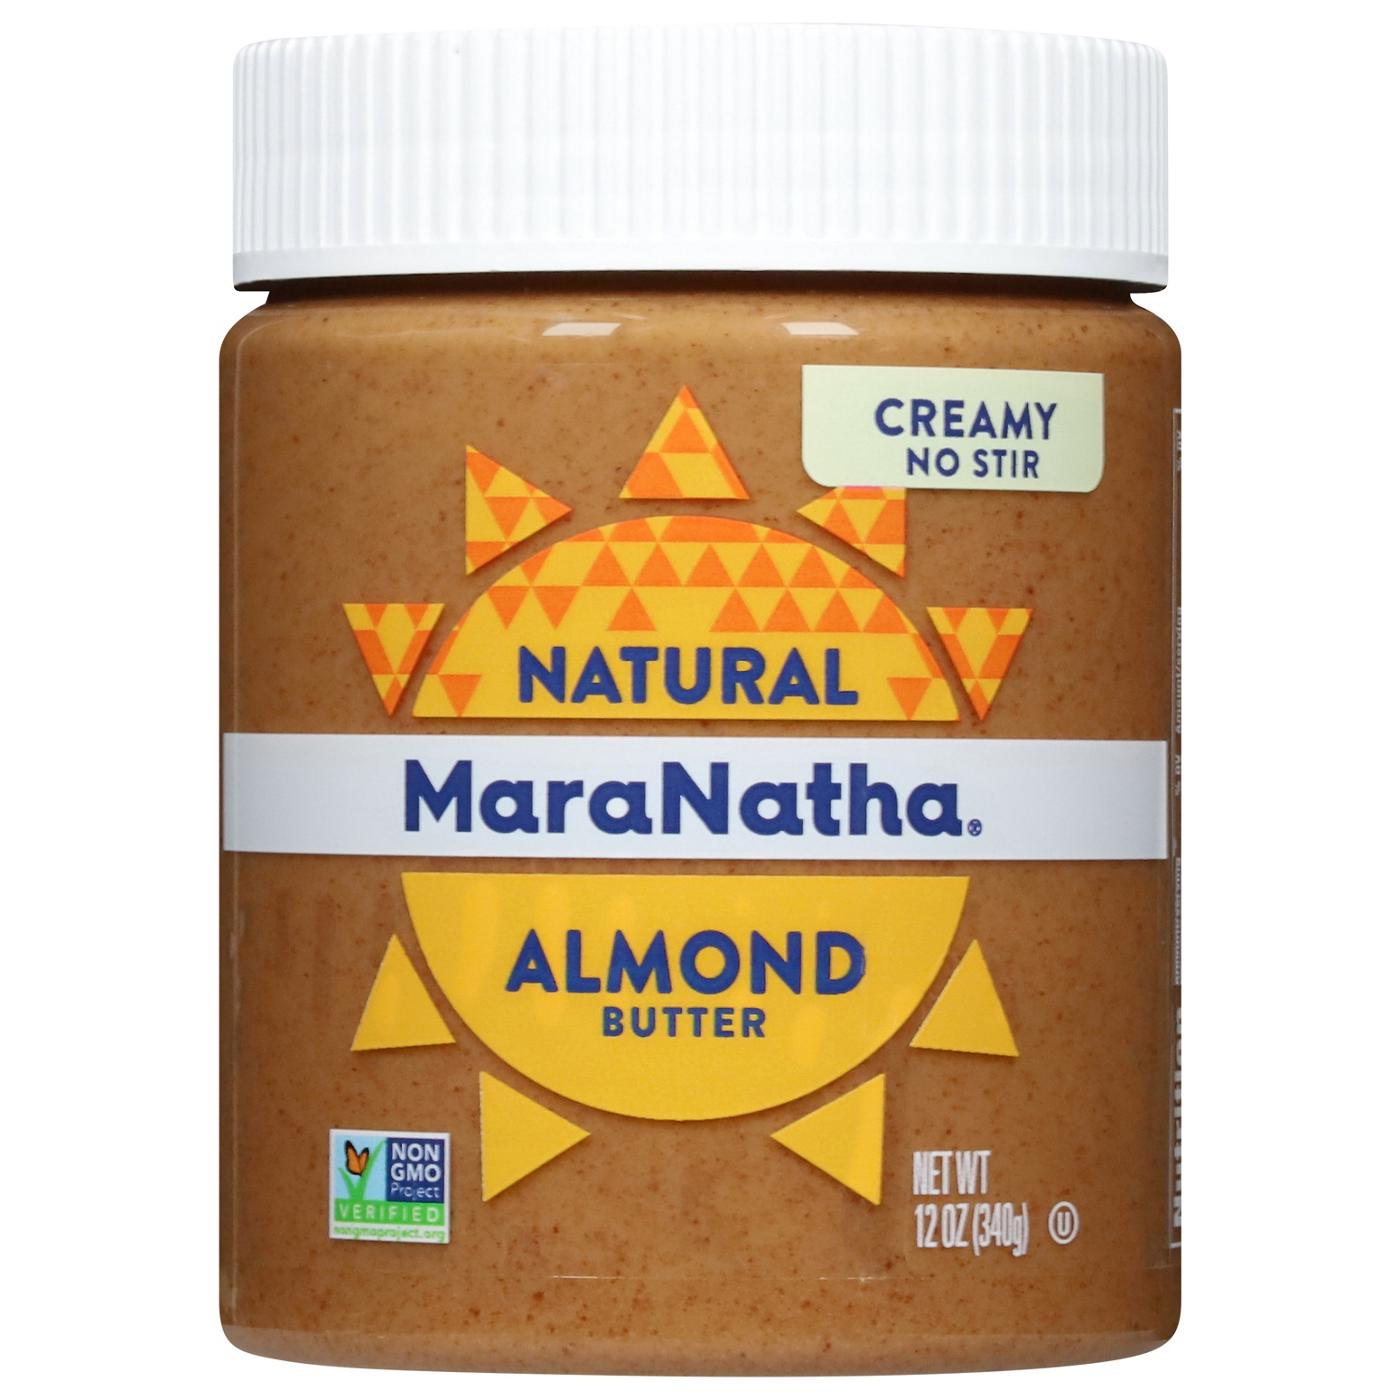 MaraNatha All Natural No Stir Creamy Almond Butter; image 1 of 2